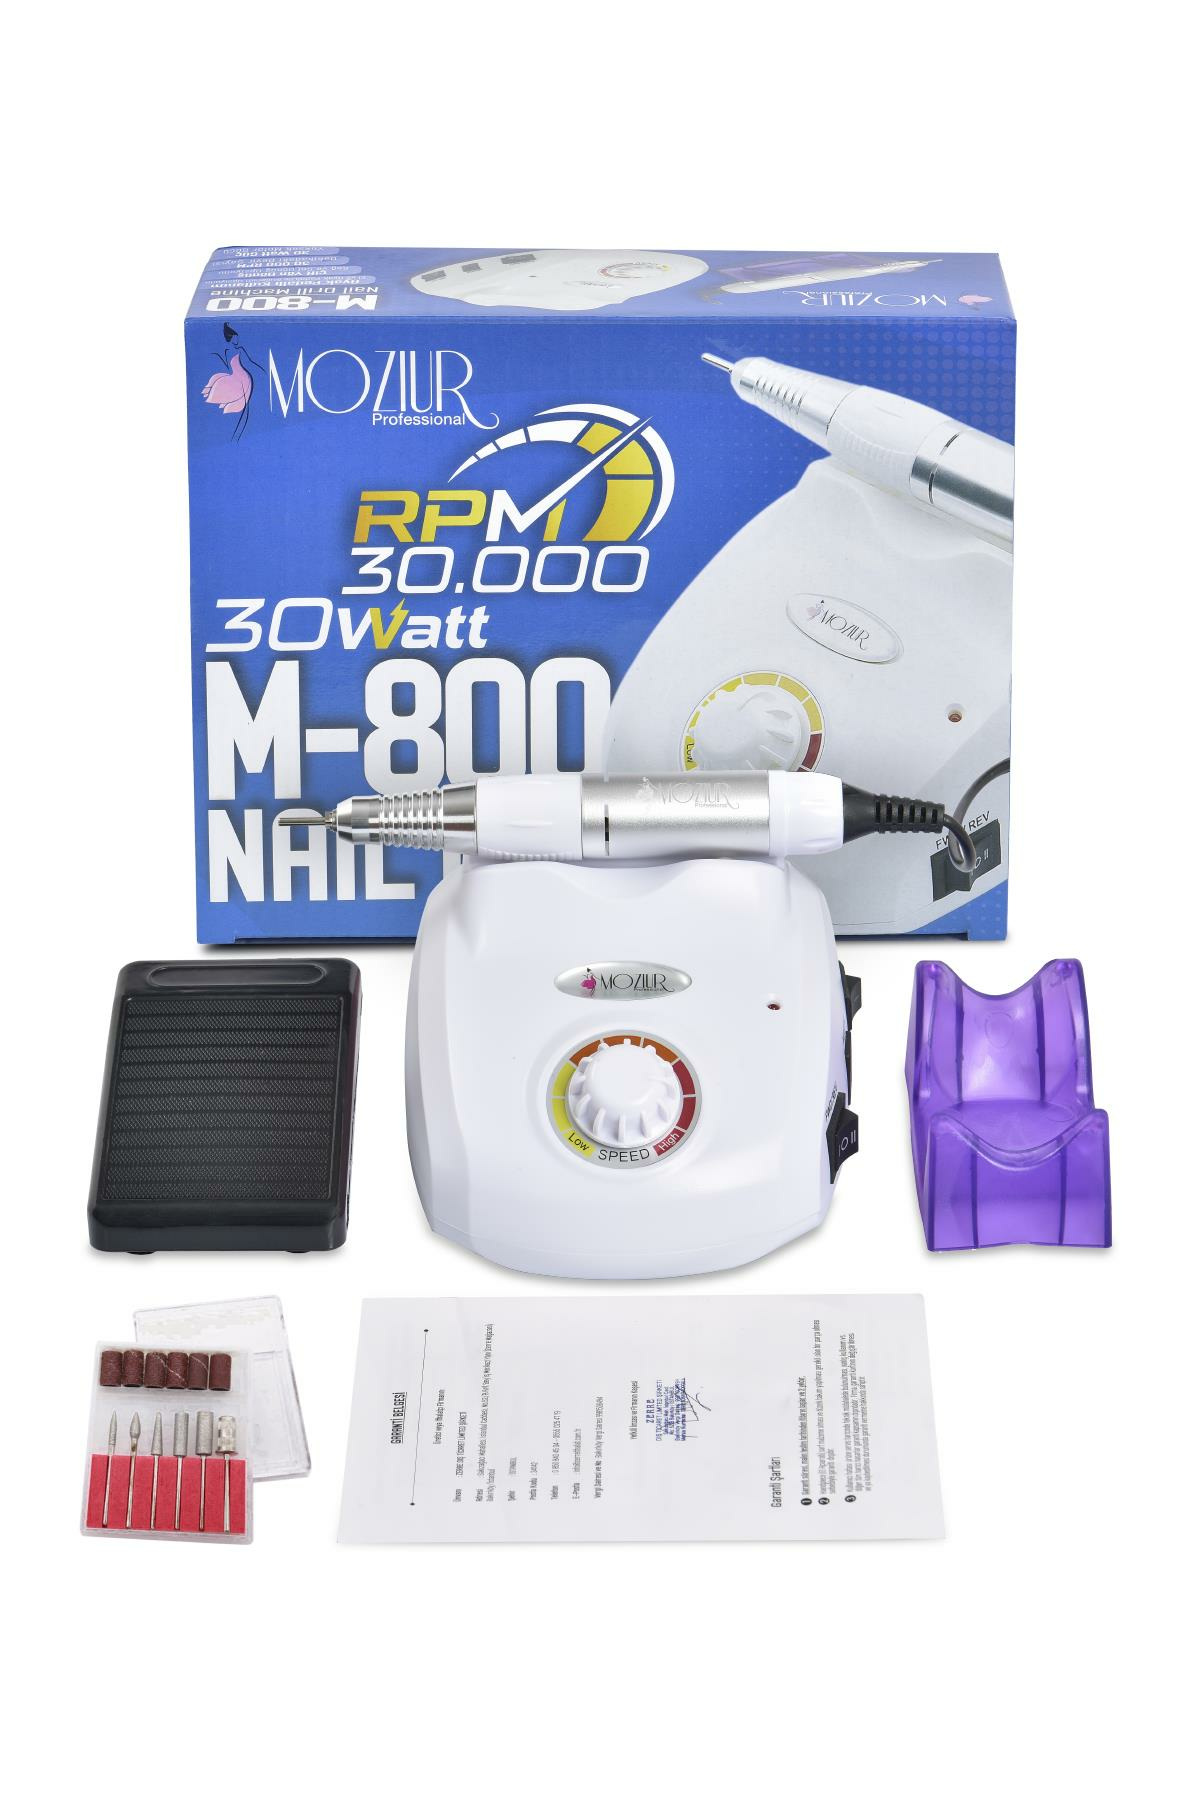 MOZIUR M-800 Elektrikli Tırnak Törpüsü Makinesi 30W 30.000 RPM - Beyaz